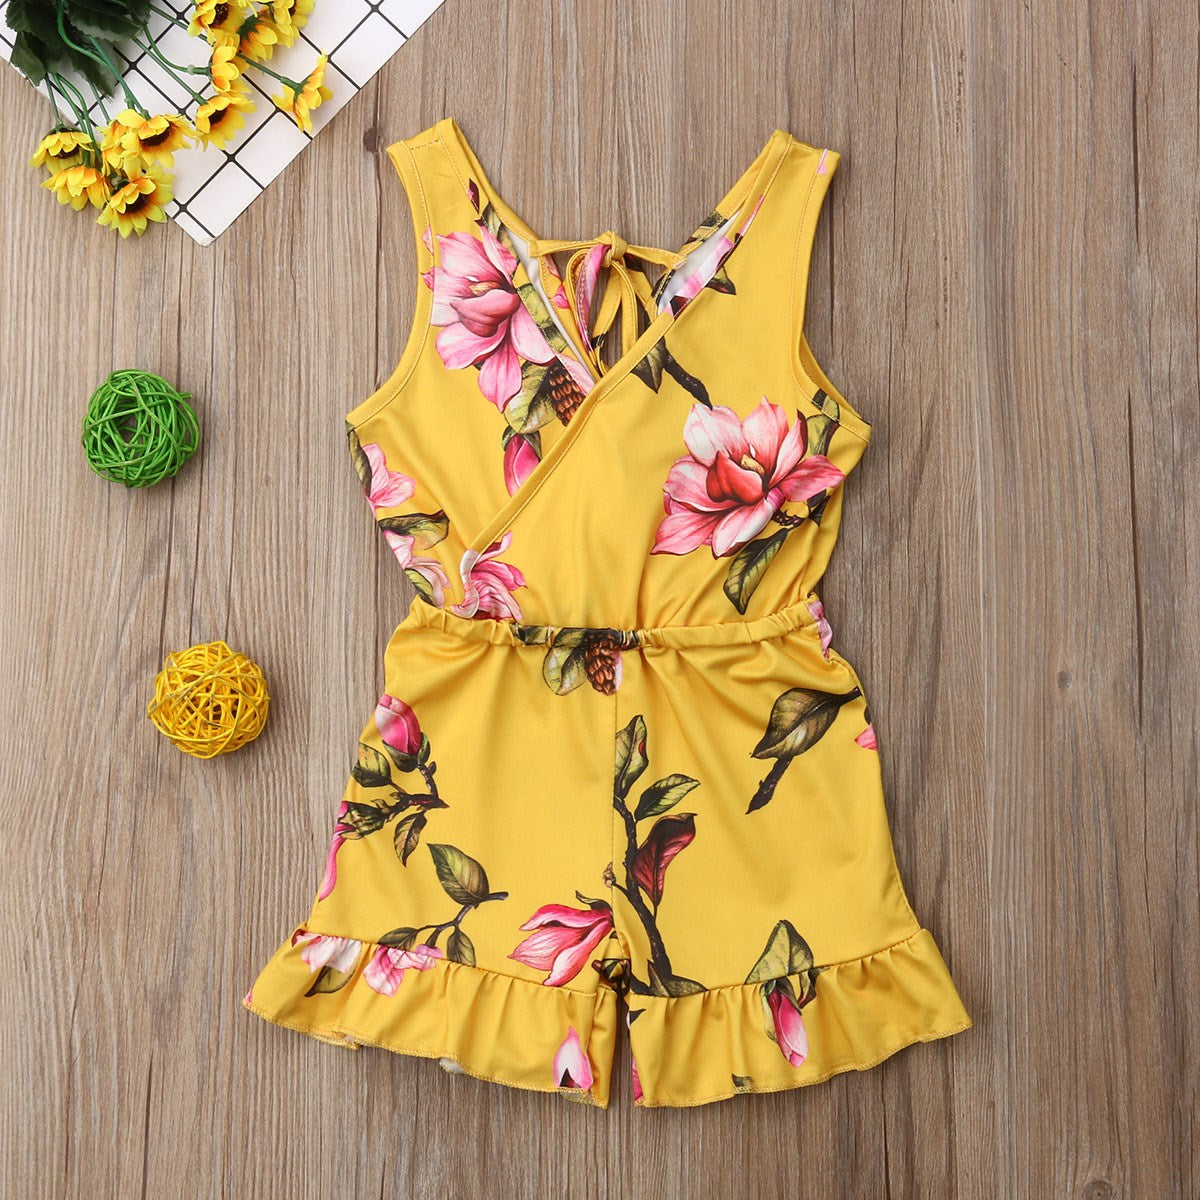 Floral Printed Jumpsuit For Girl's | GlamzLife